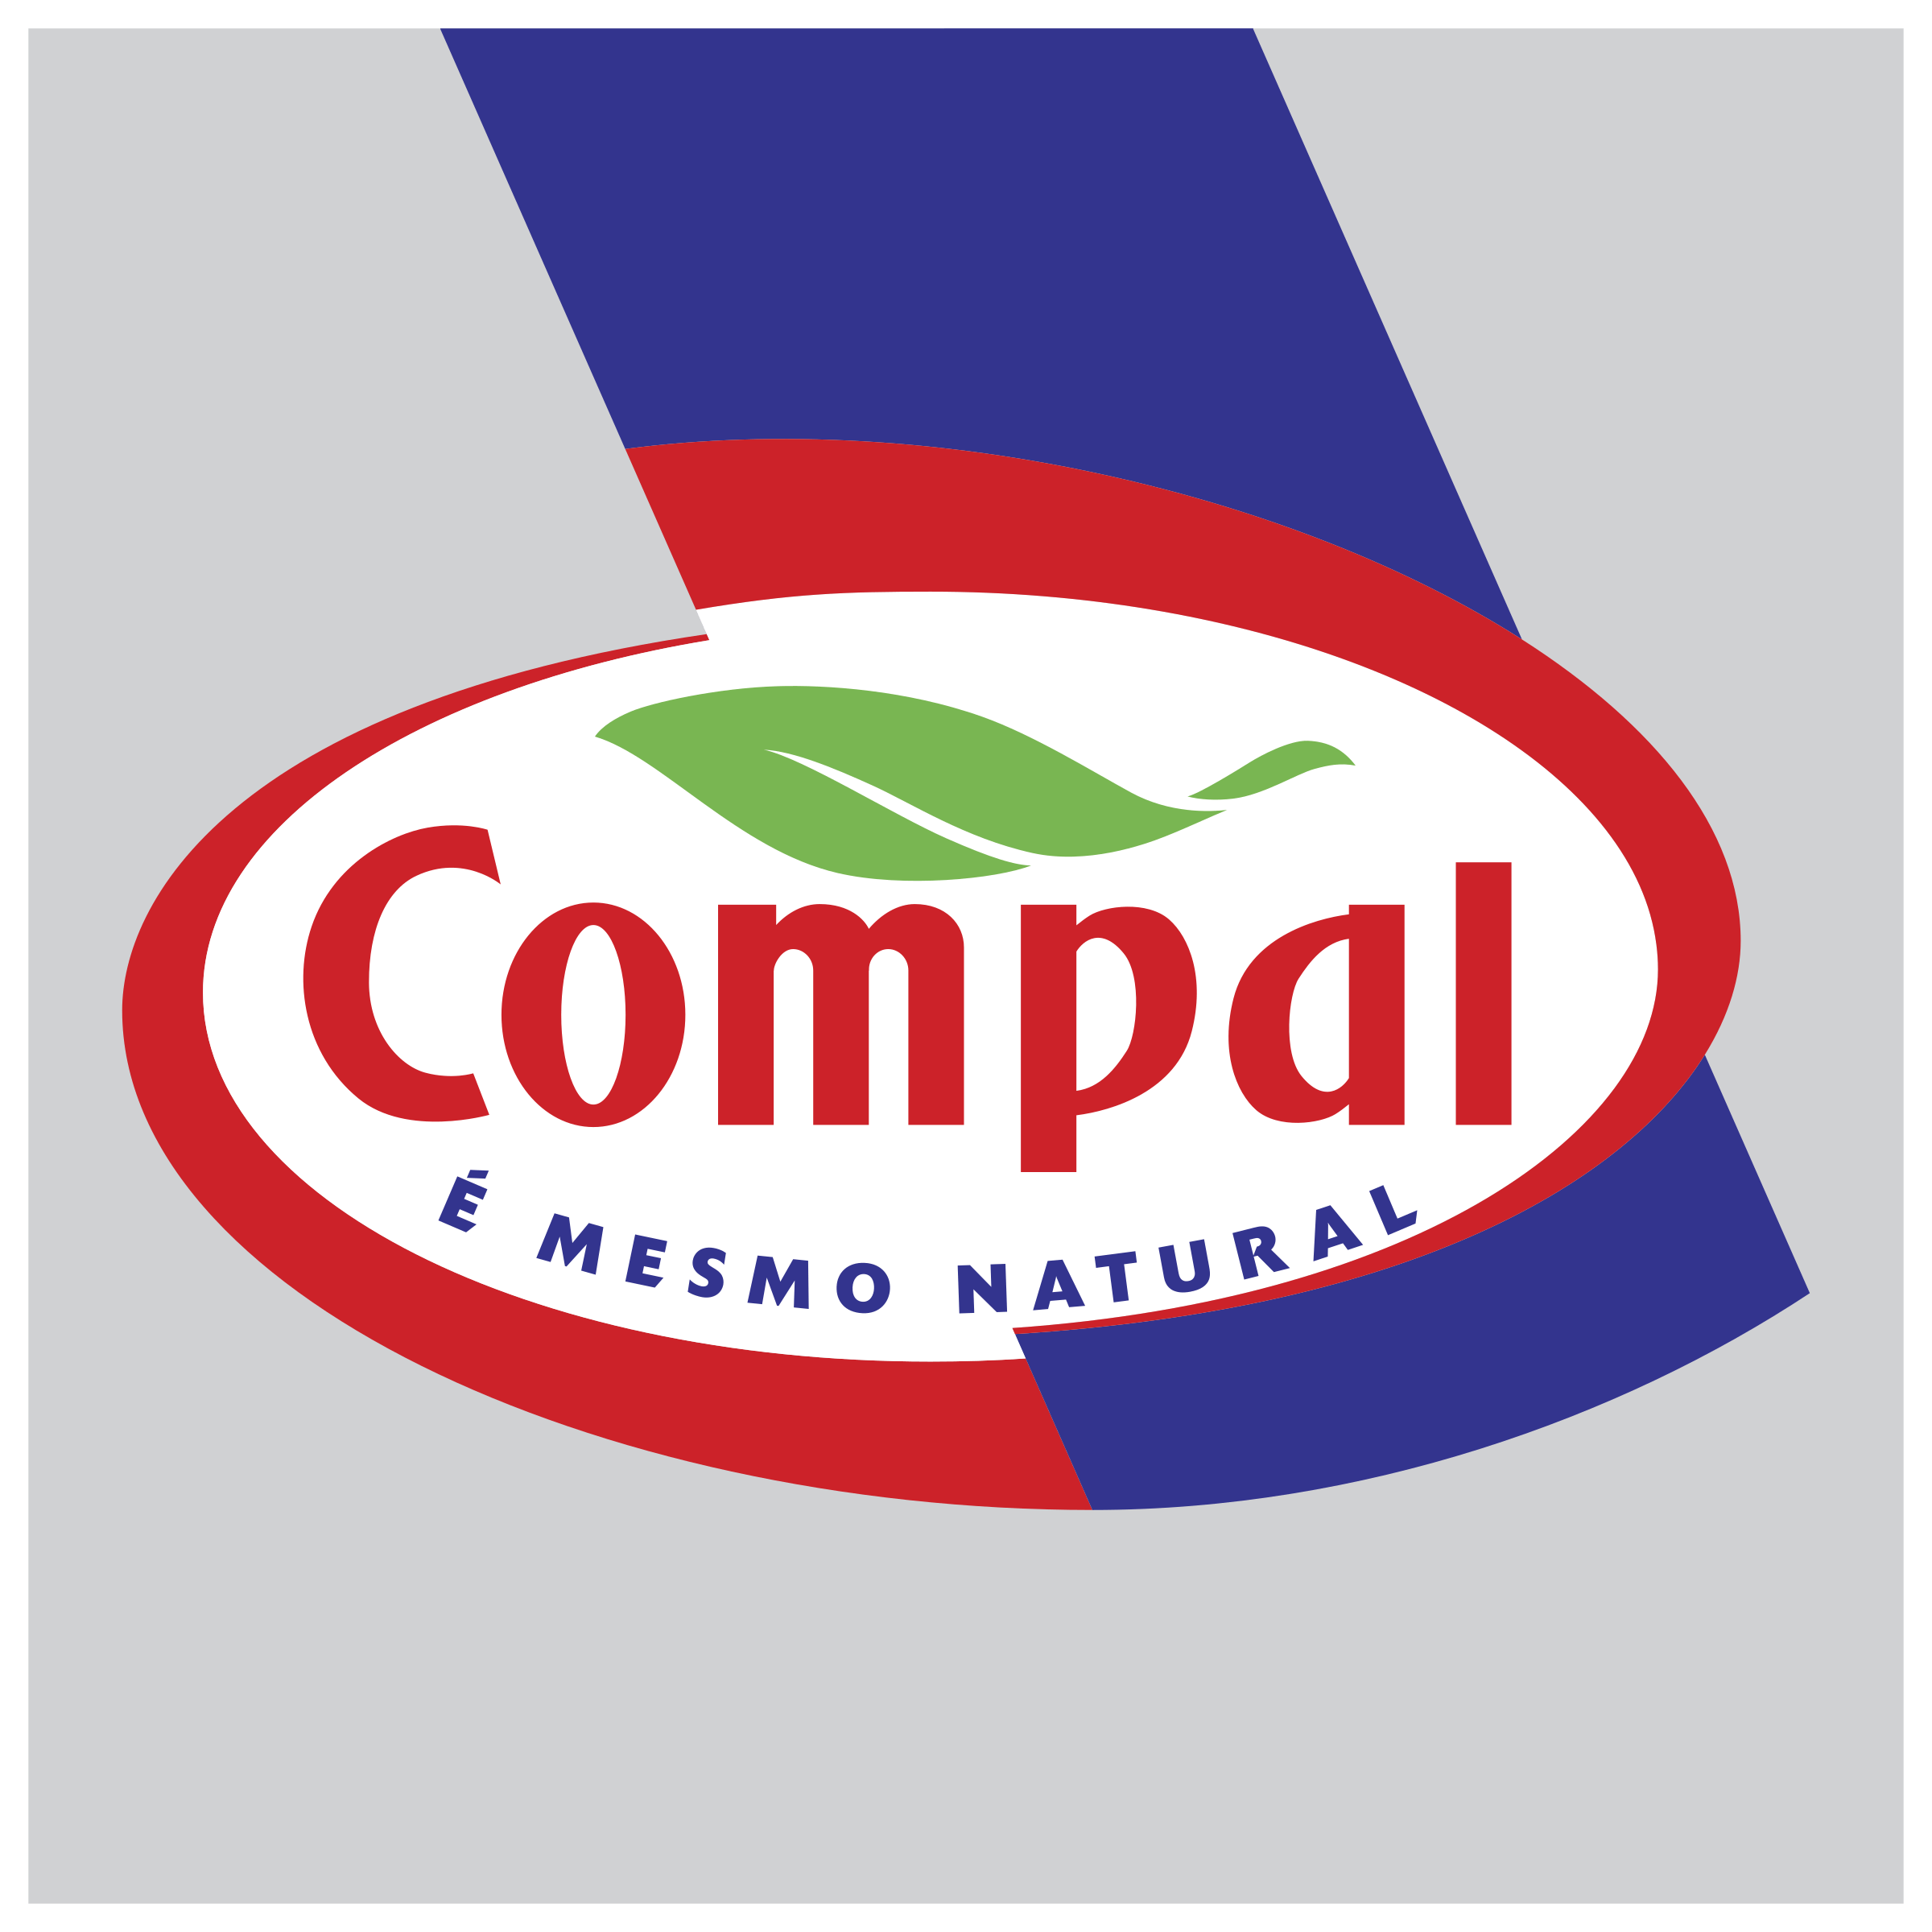 Compal Logo - Compal Logo PNG Transparent & SVG Vector - Freebie Supply